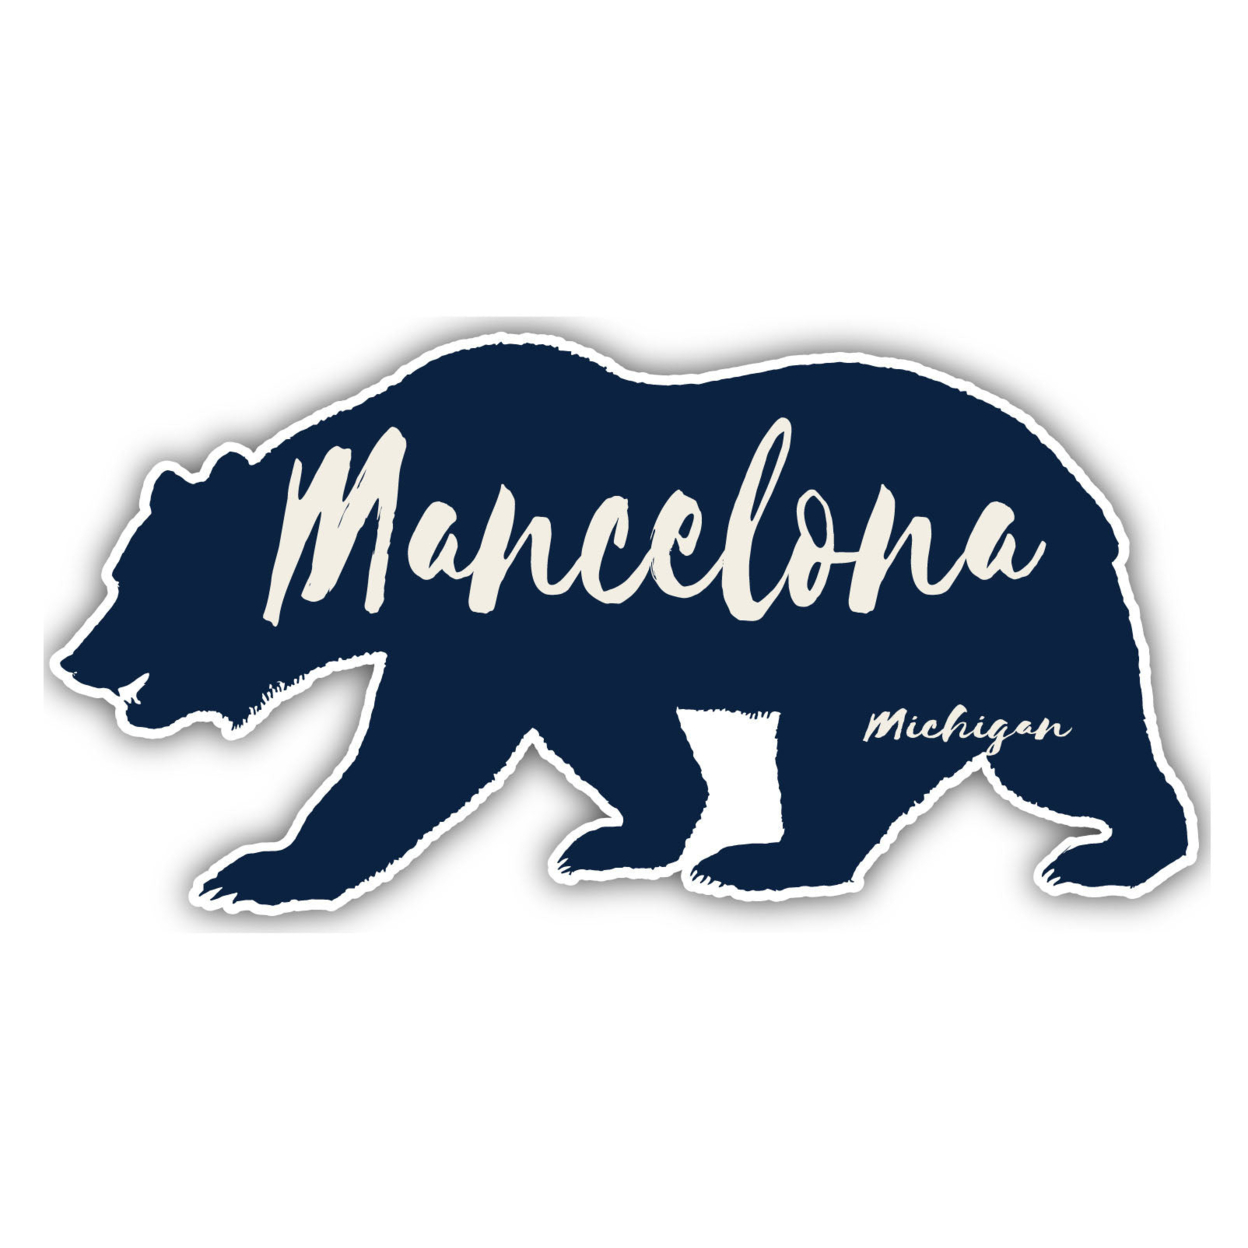 Mancelona Michigan Souvenir Decorative Stickers (Choose Theme And Size) - 2-Inch, Tent